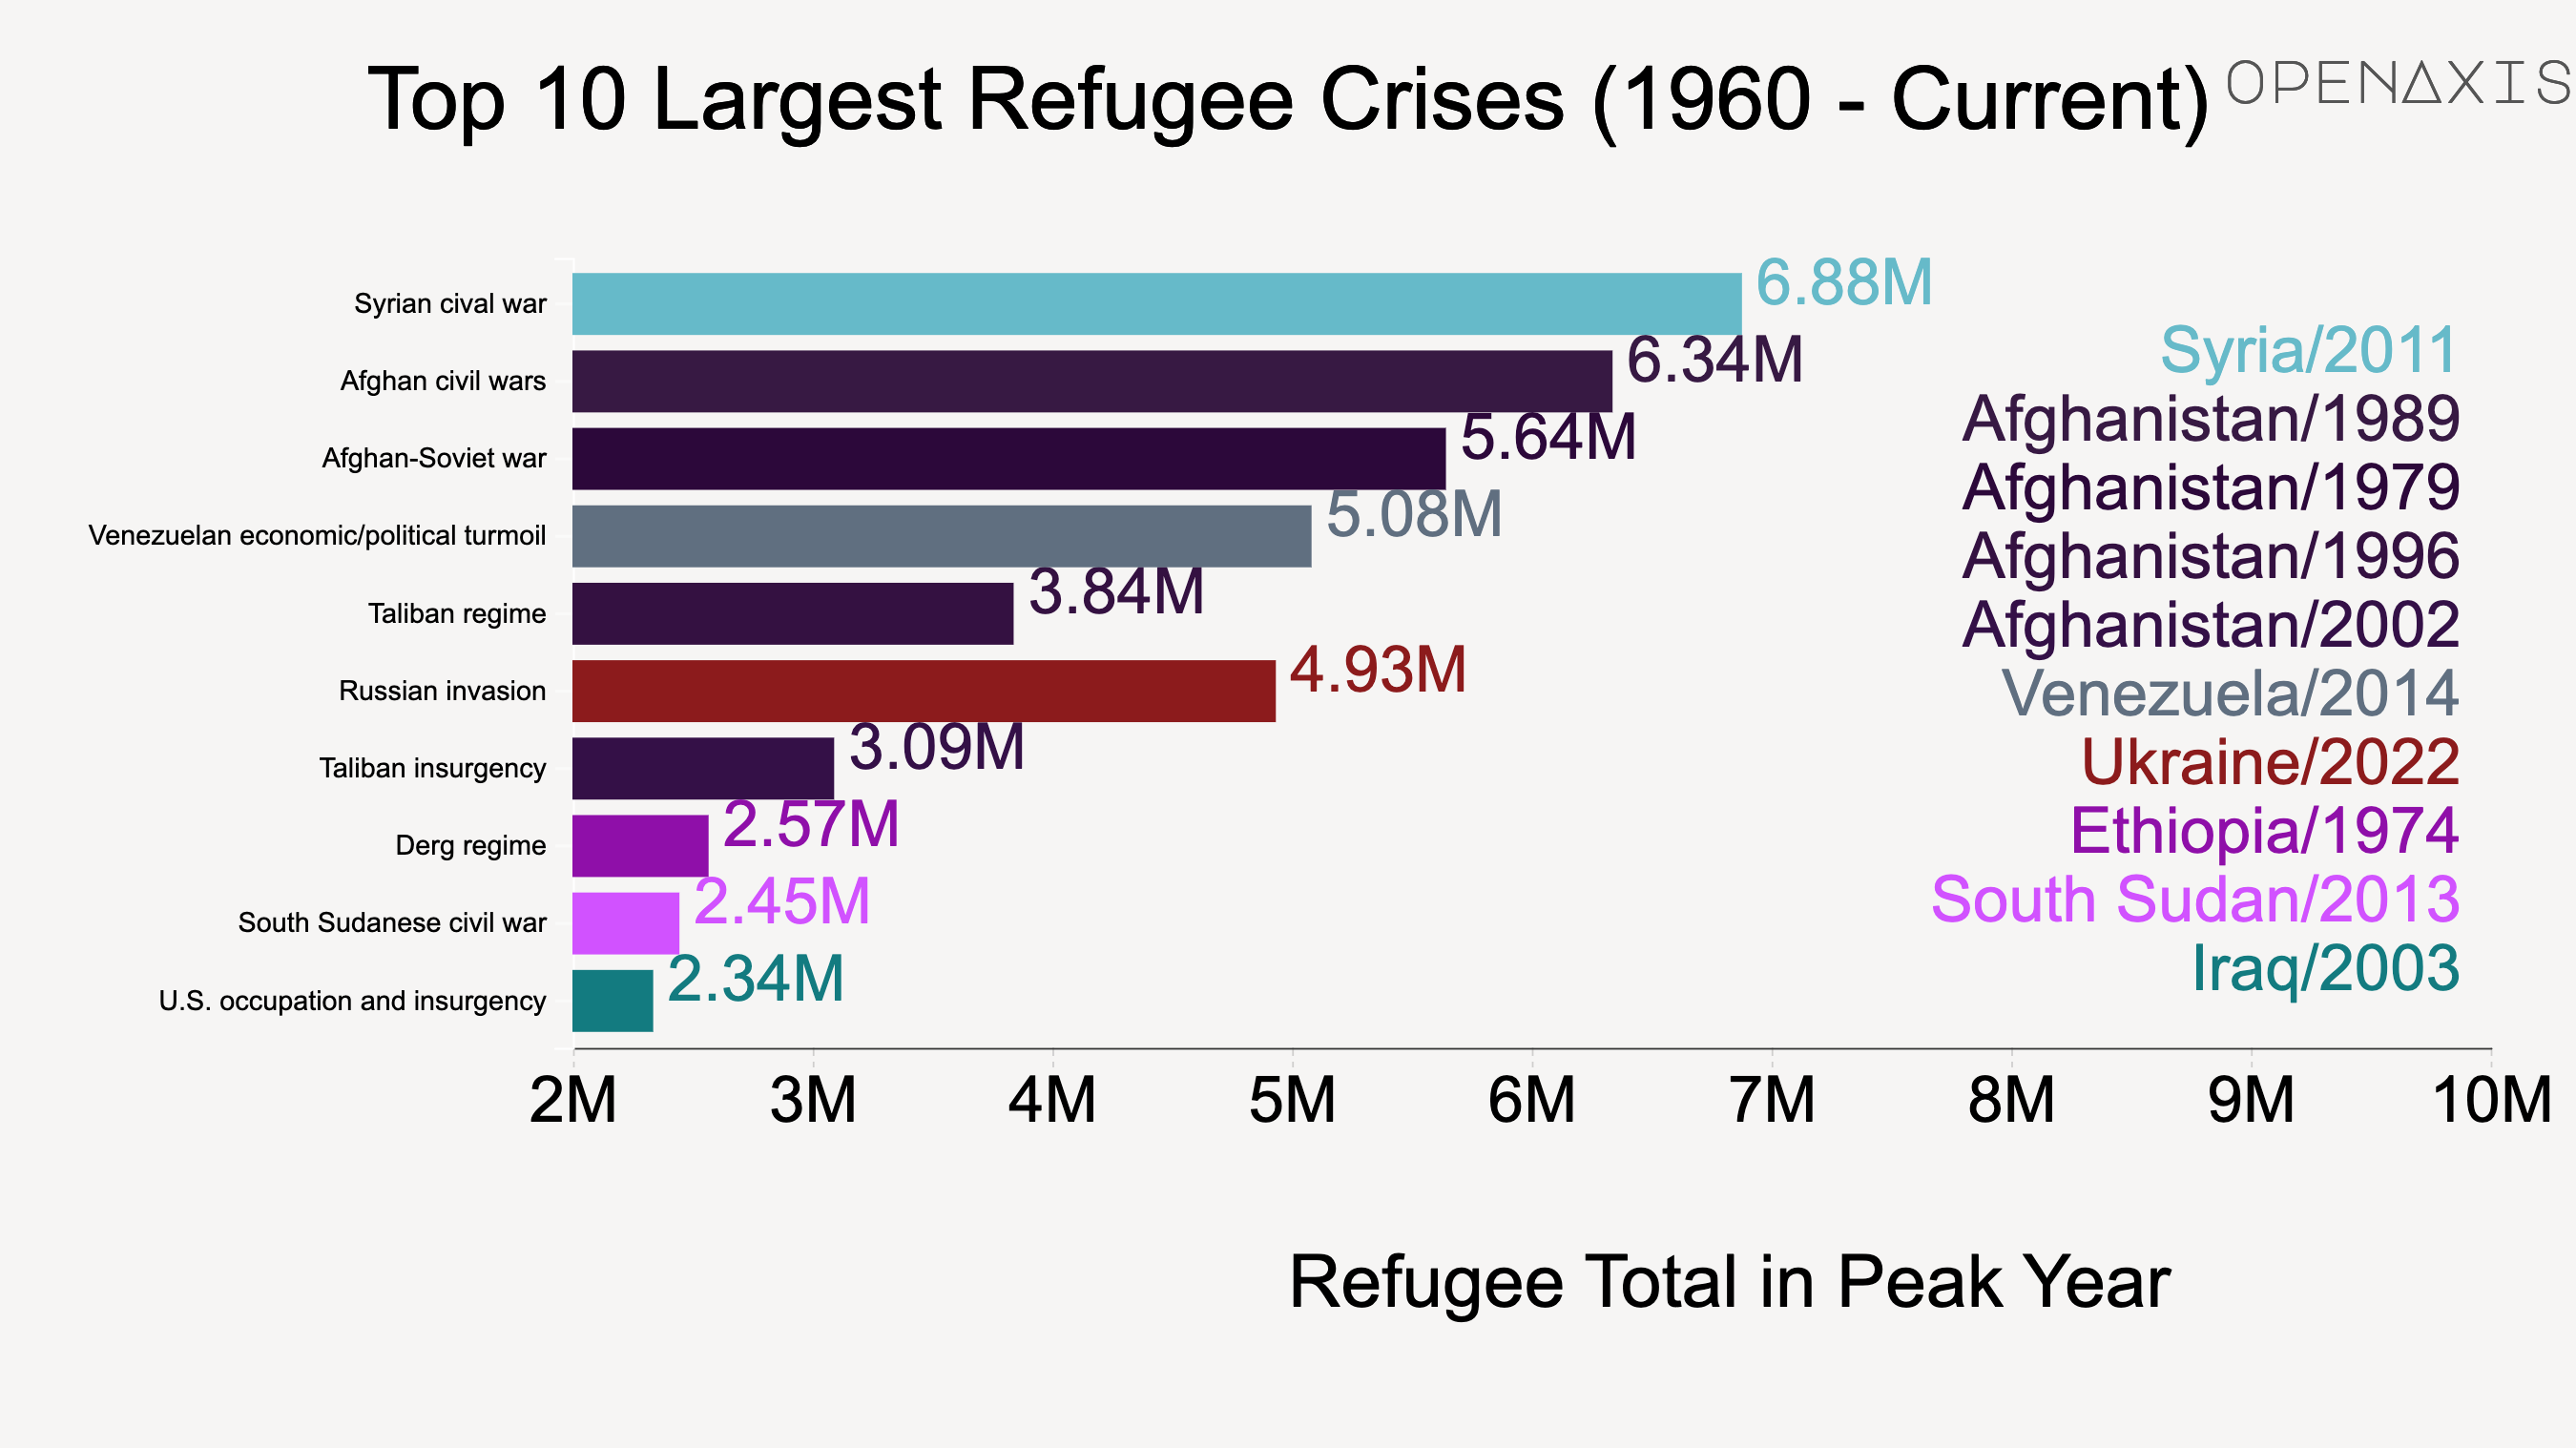 "Top 10 Largest Refugee Crises (1960 - Current)"